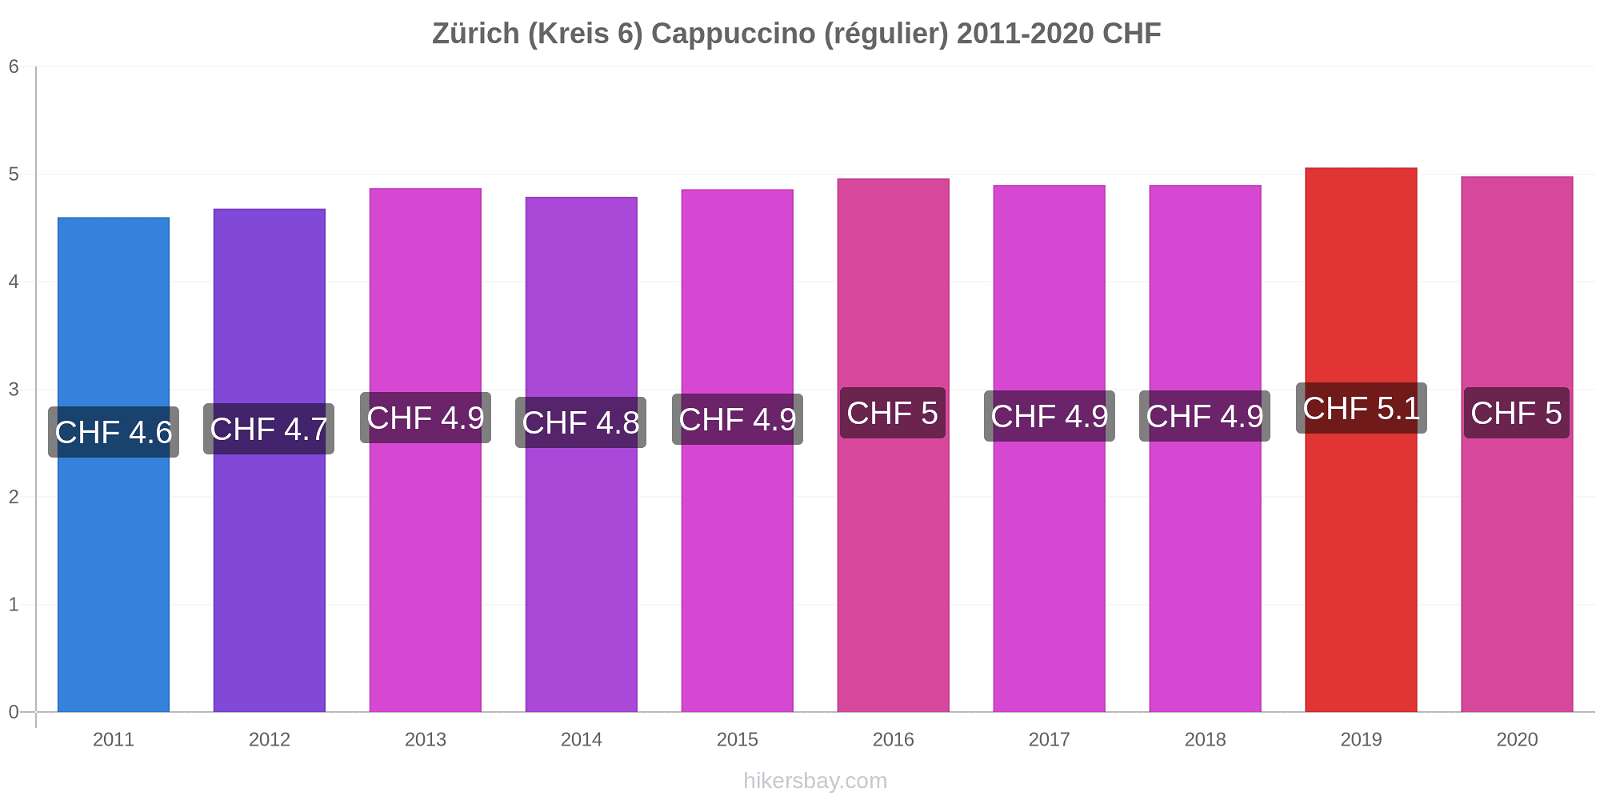 Zürich (Kreis 6) changements de prix Cappuccino (régulier) hikersbay.com